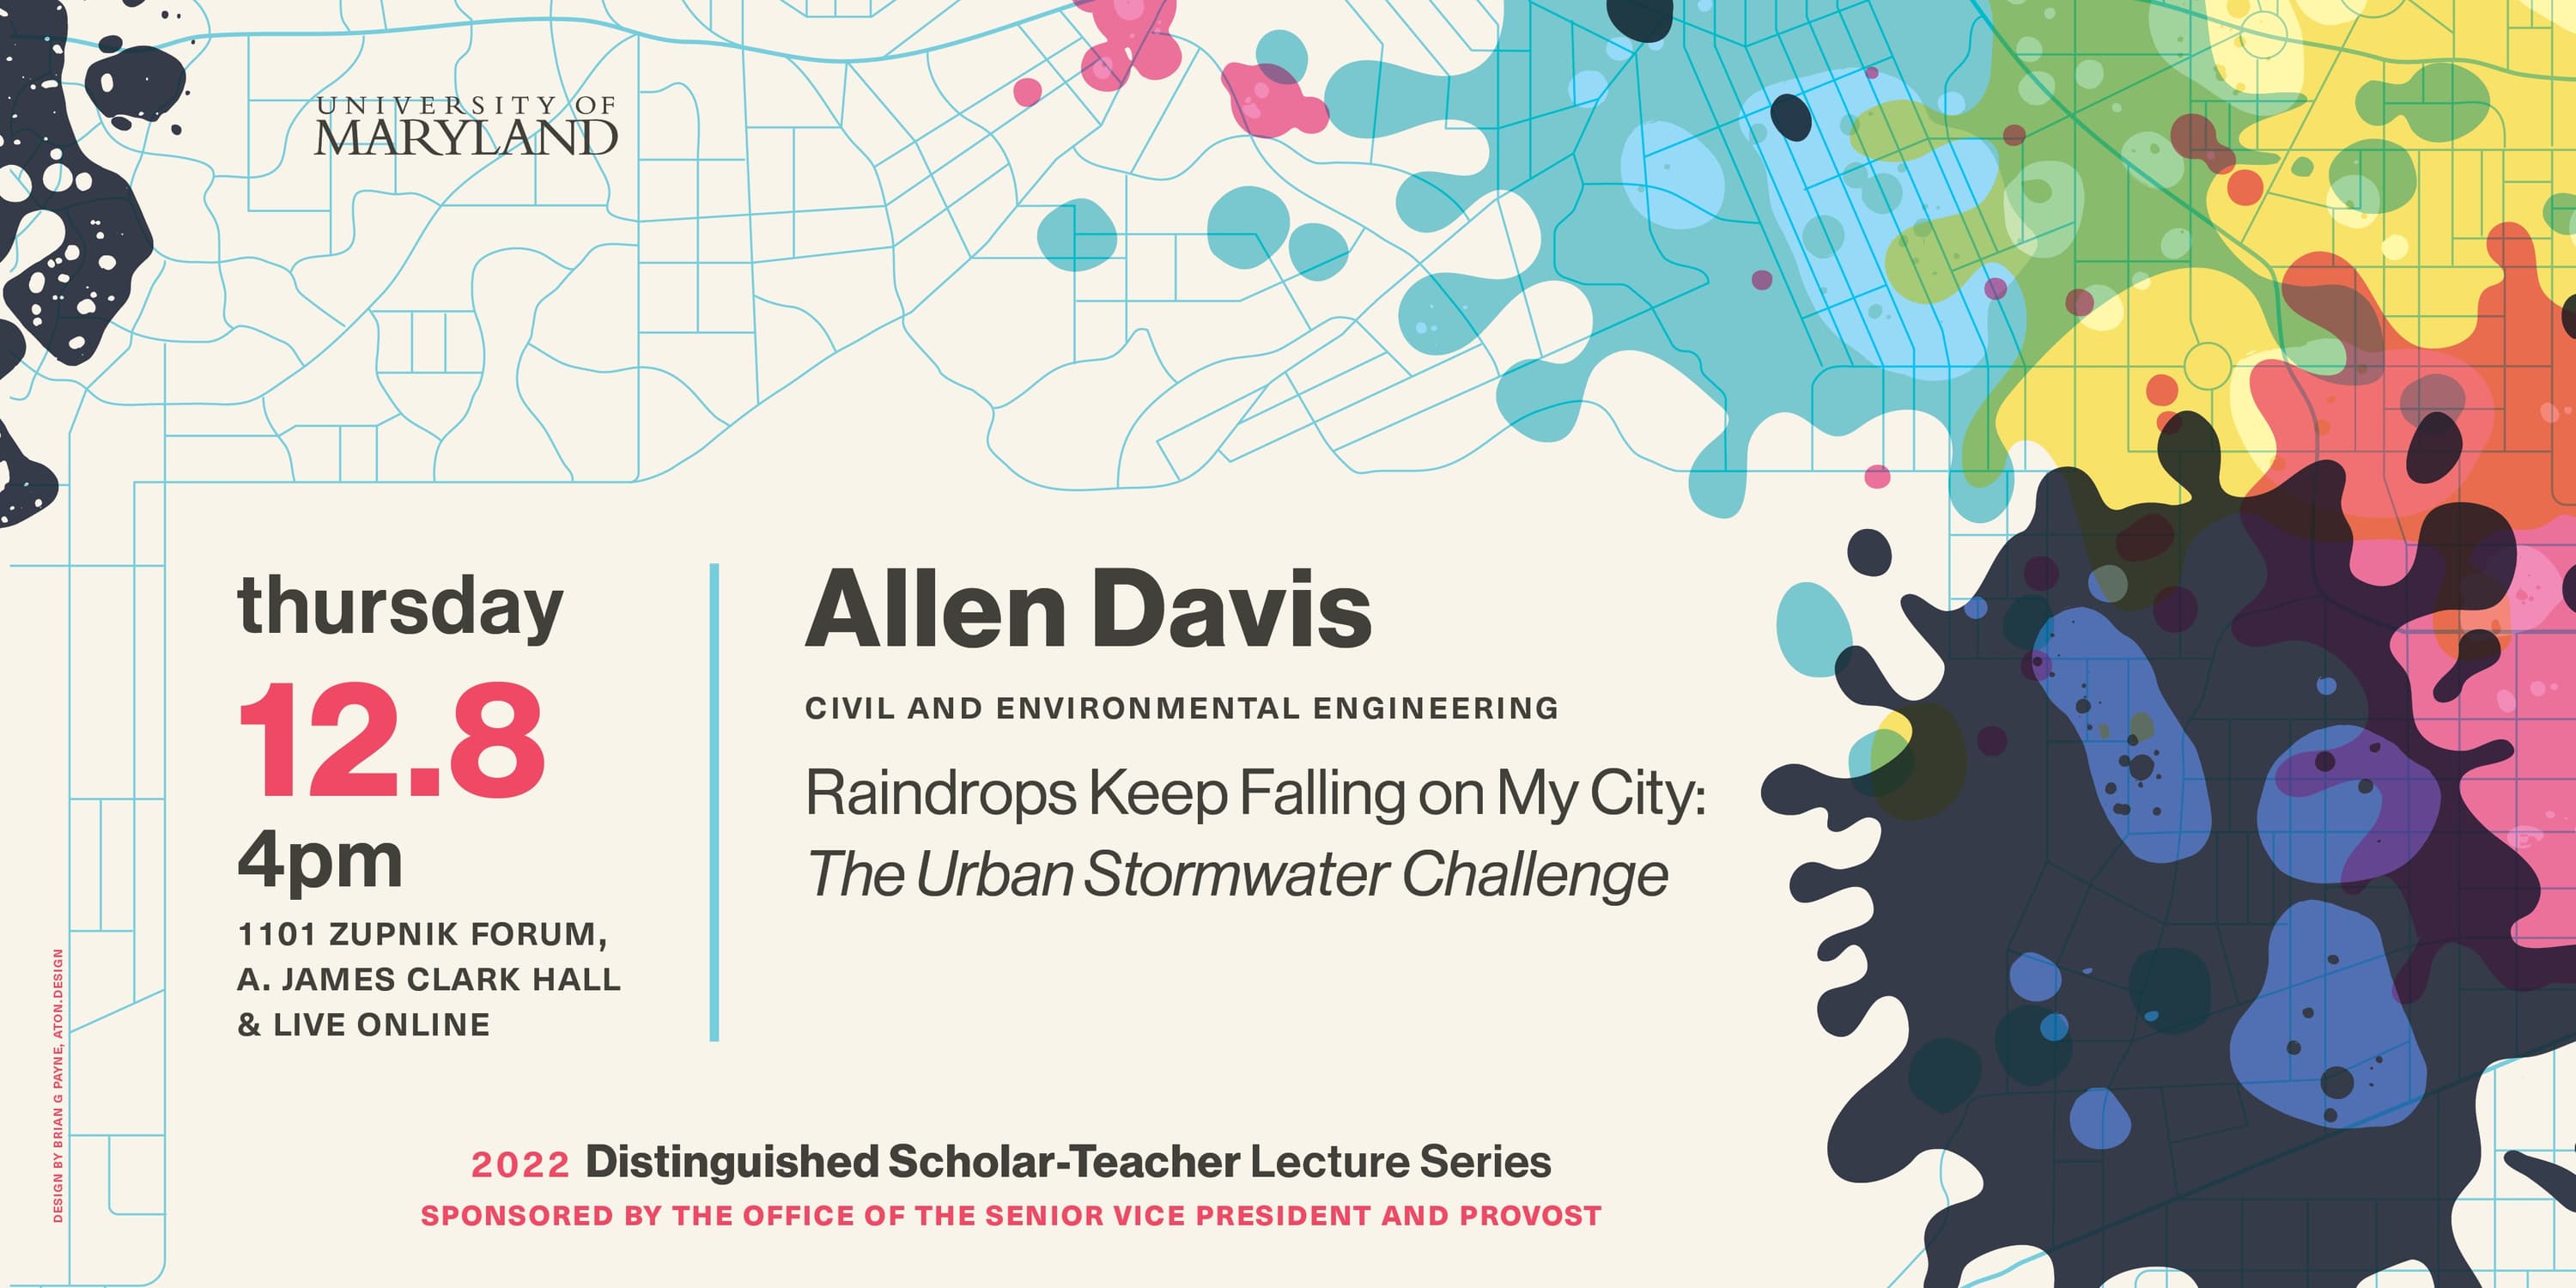 Dr. Allen Davis' Distinguished Scholar-Teacher Lecture Series Poster